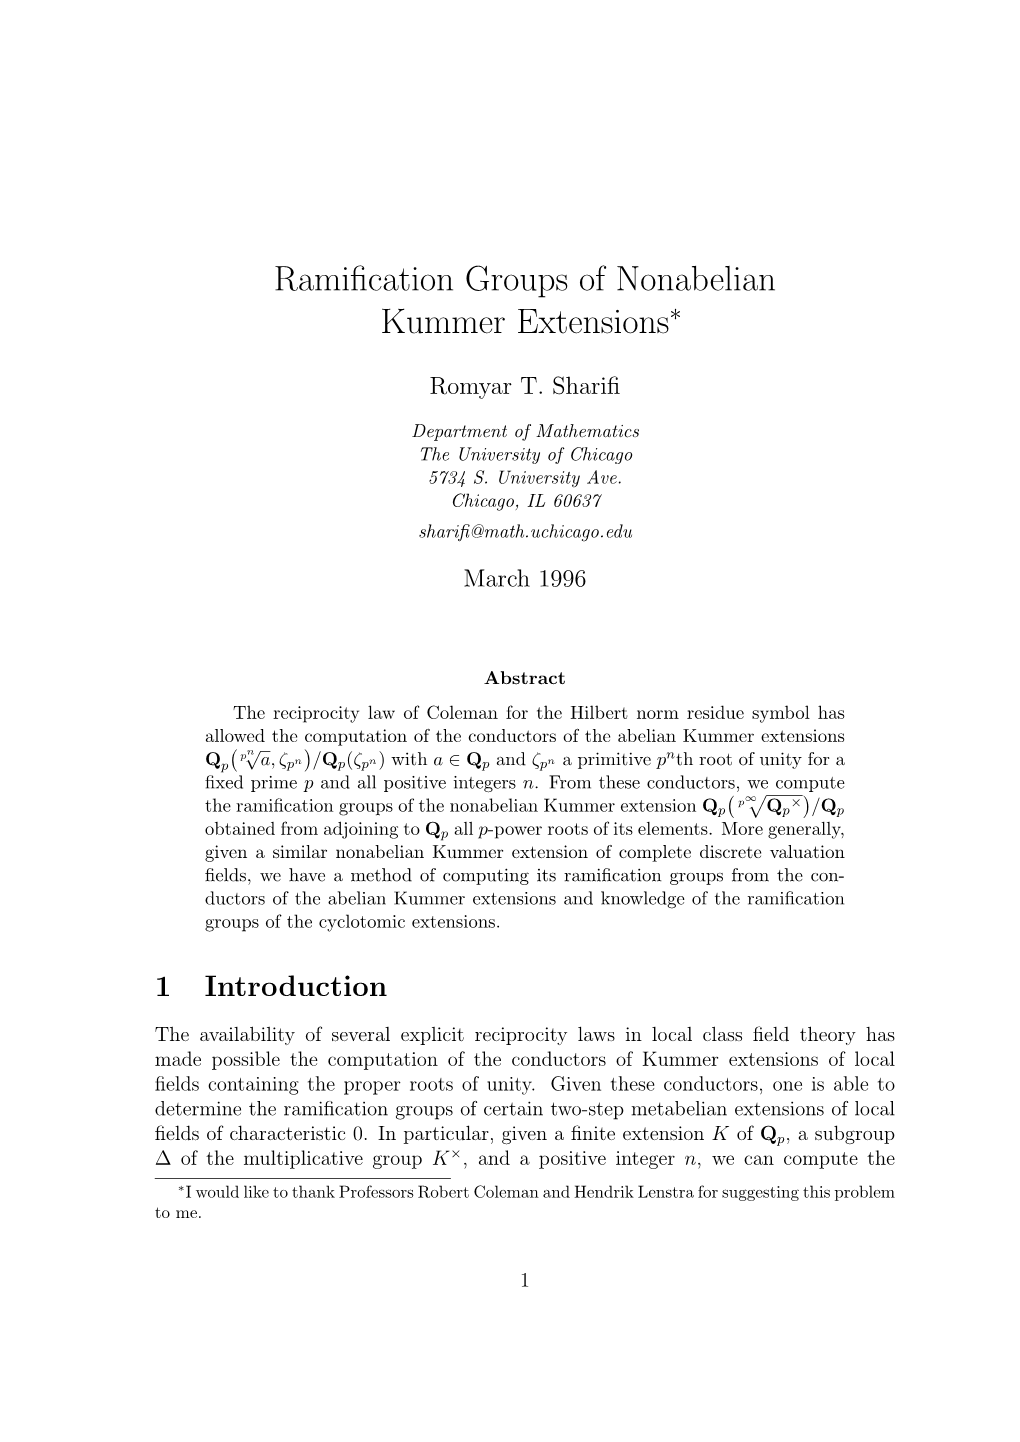 Ramification Groups of Nonabelian Kummer Extensions